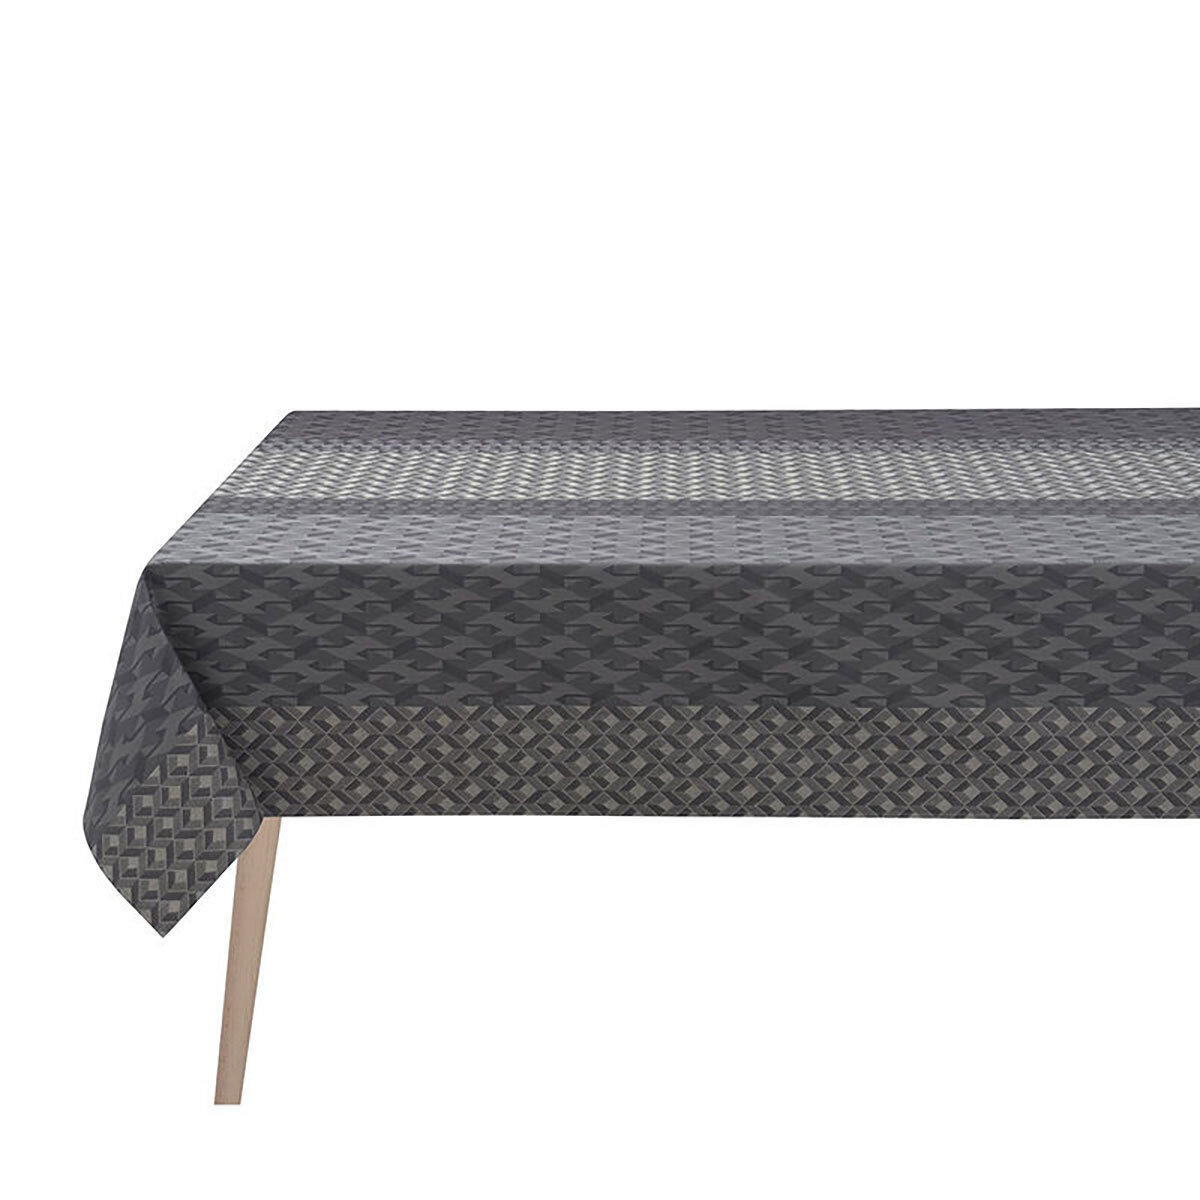 Le Jacquard Francais Tablecloth Caractere Grey 100% Coated Cotton 59 x 86 Inch 28197